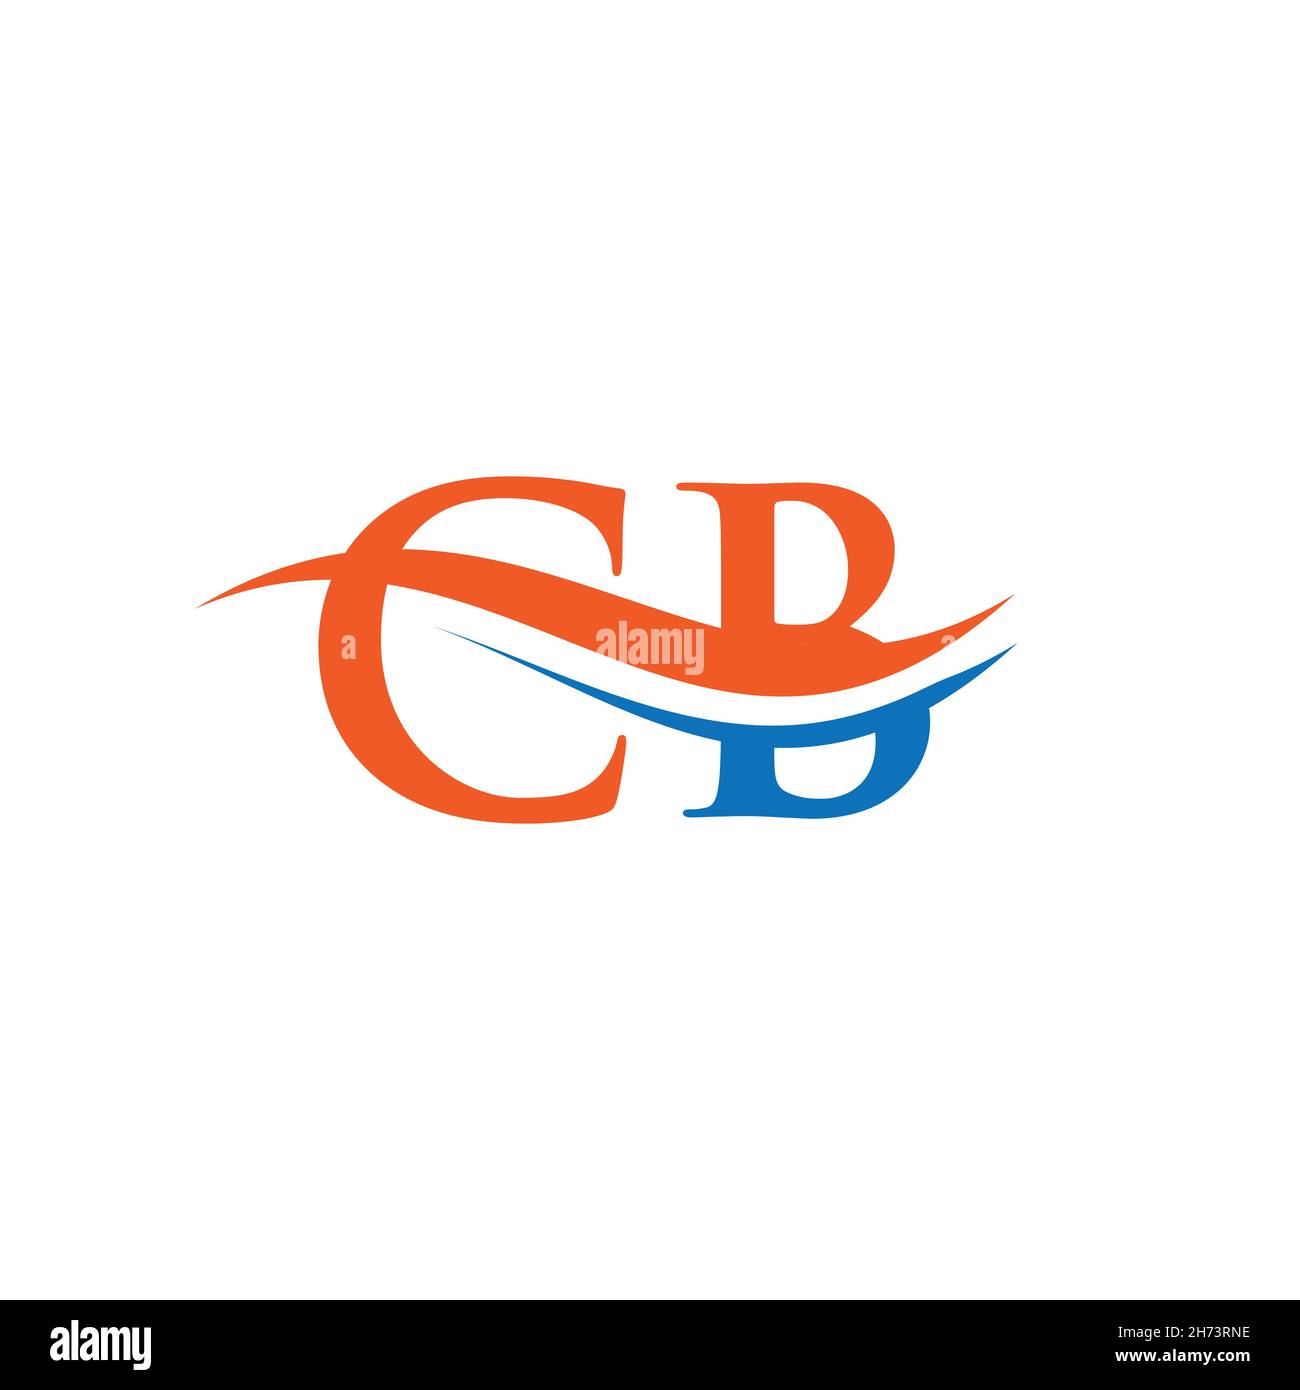 Initial CB letter logo design with modern trendy Stock Vector